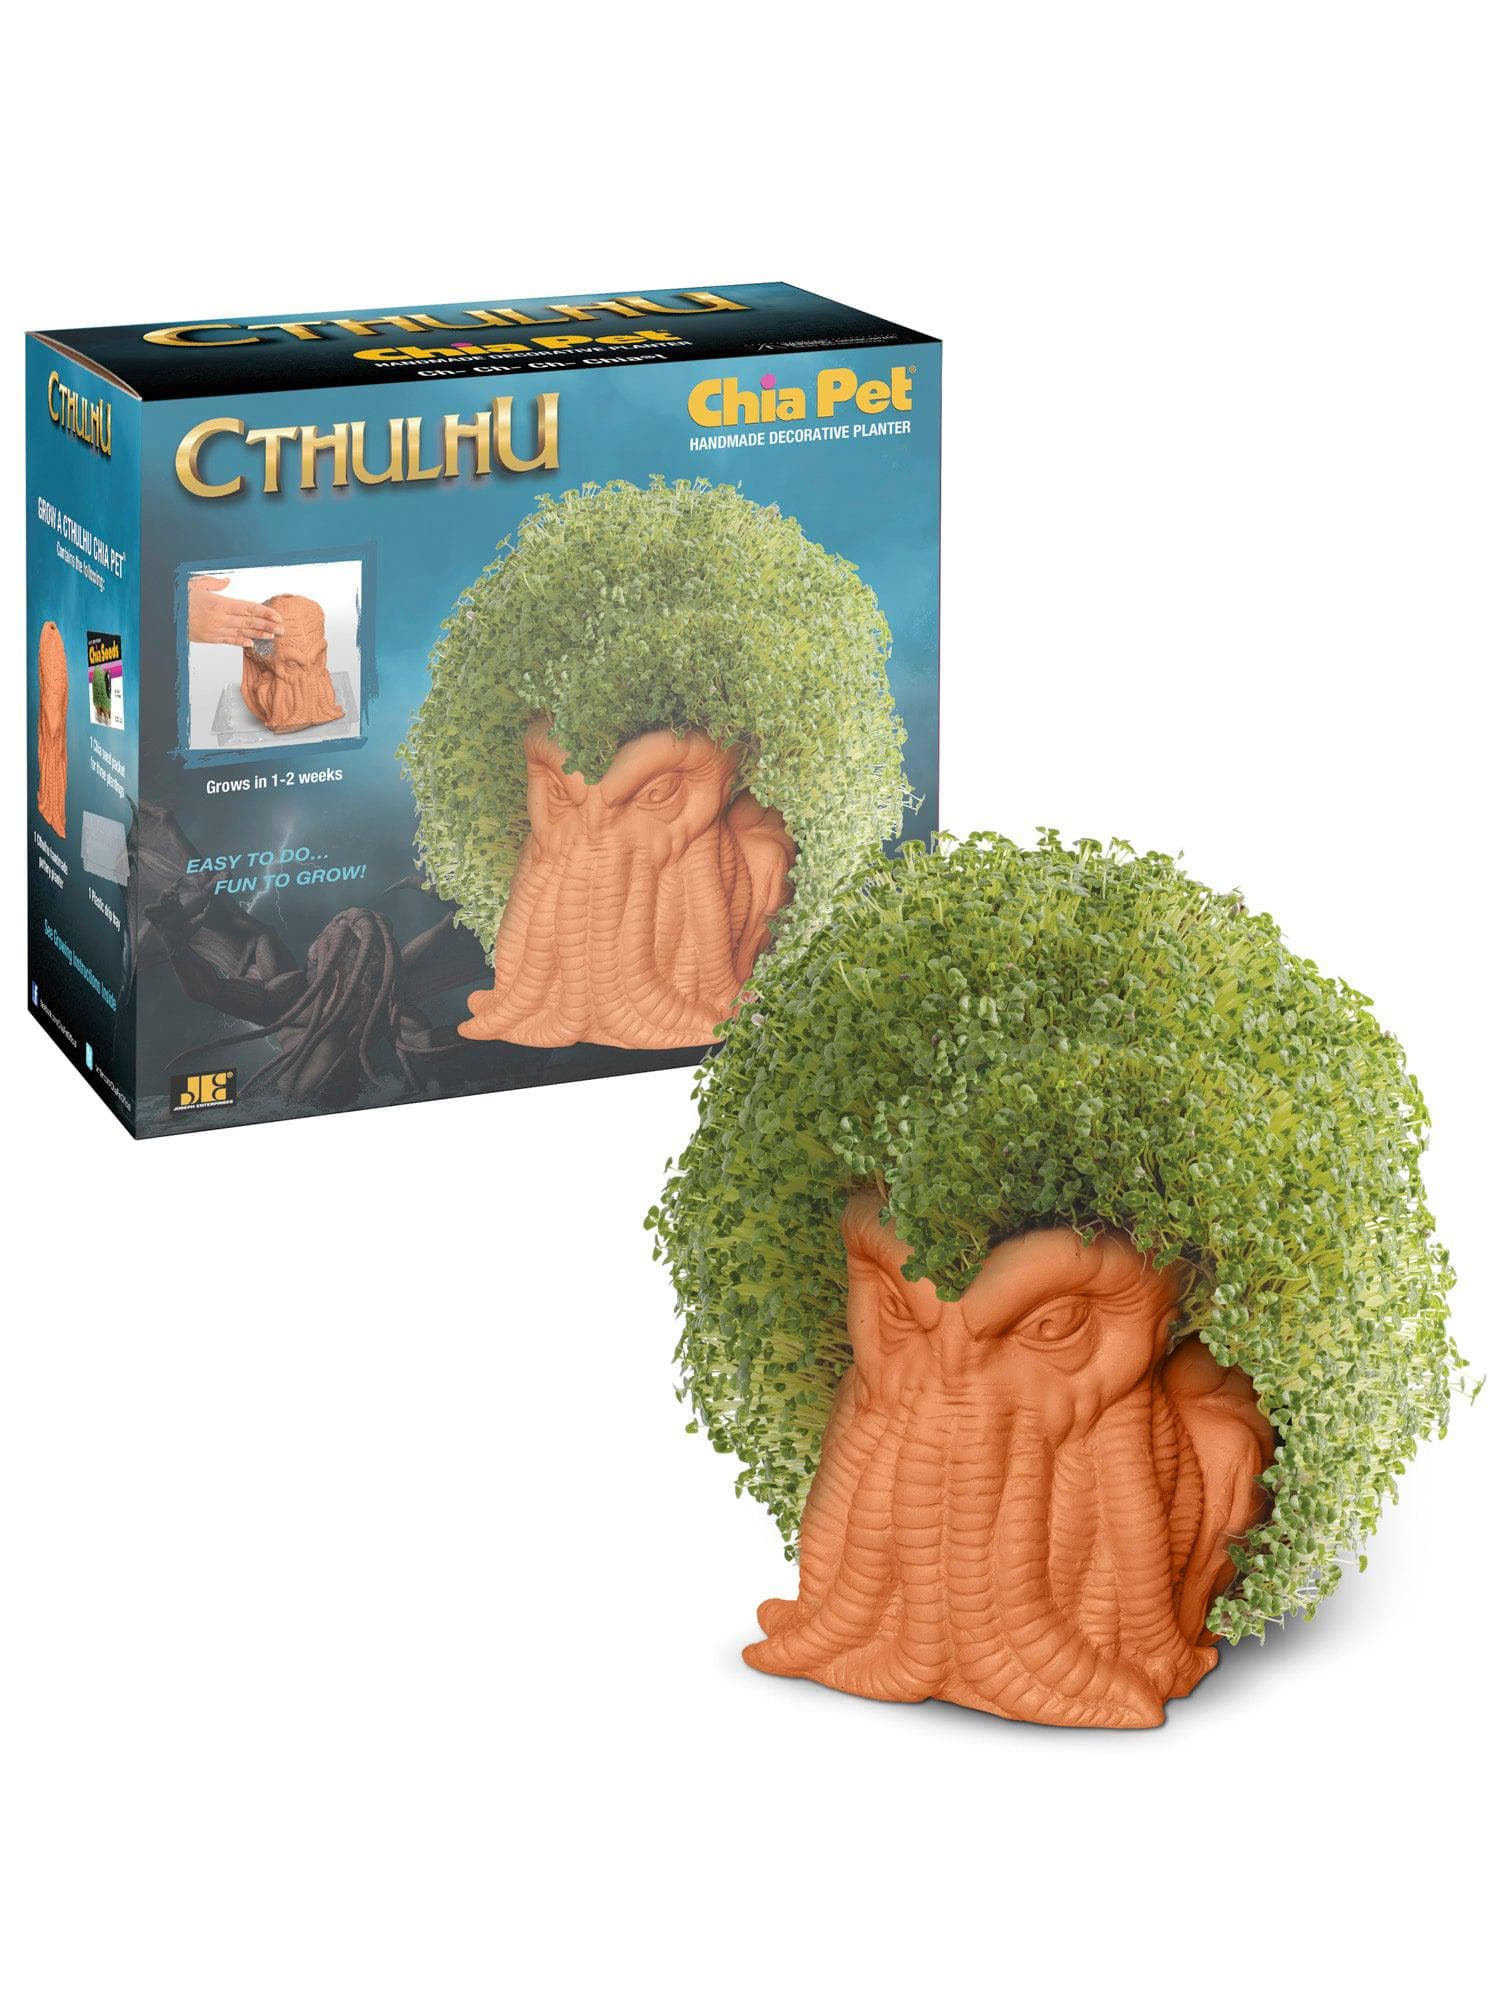 Chia Pet - Cthulhu - Decorative Planter - costumes.com